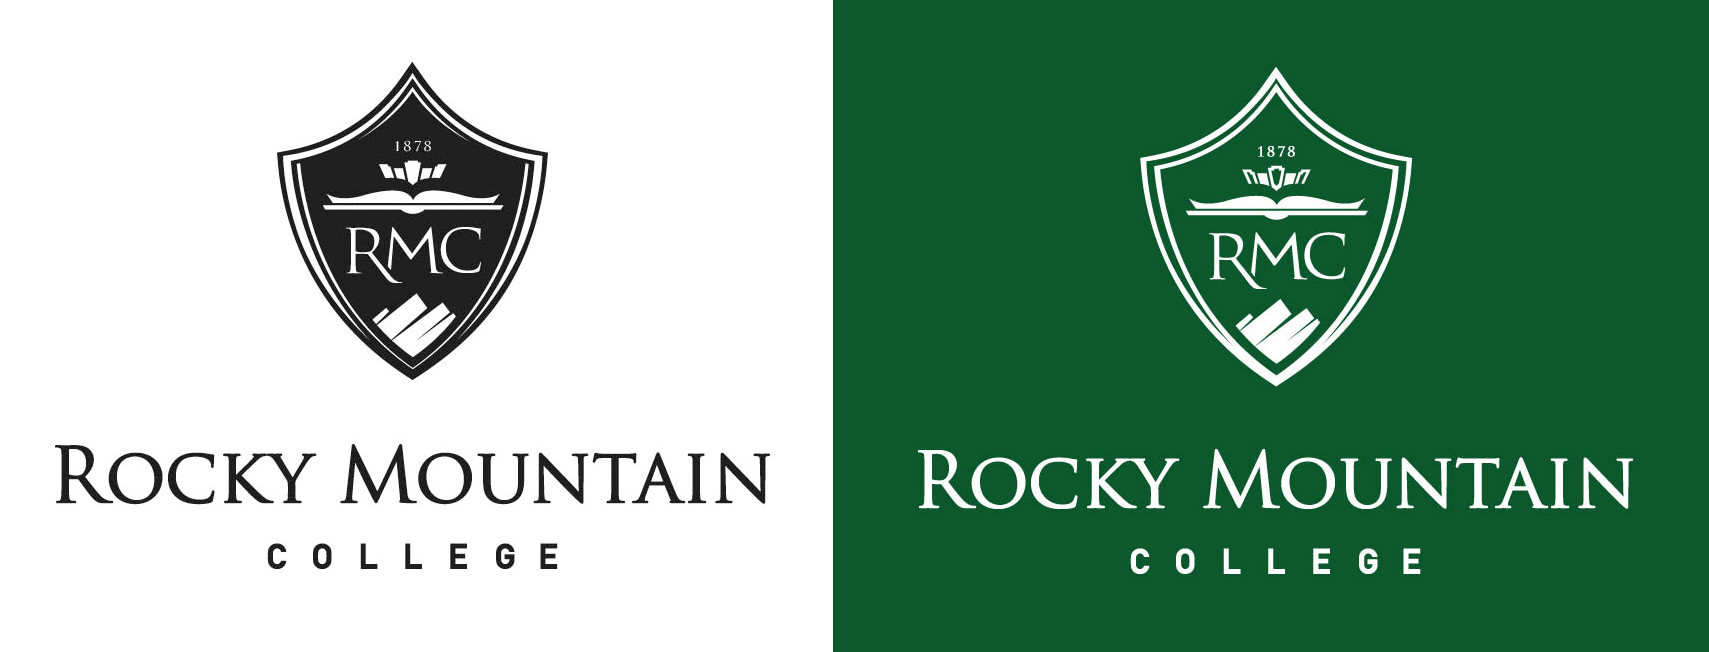 Original Mountain Logo - color - Is it OK to alter the original logo on dark background or ...